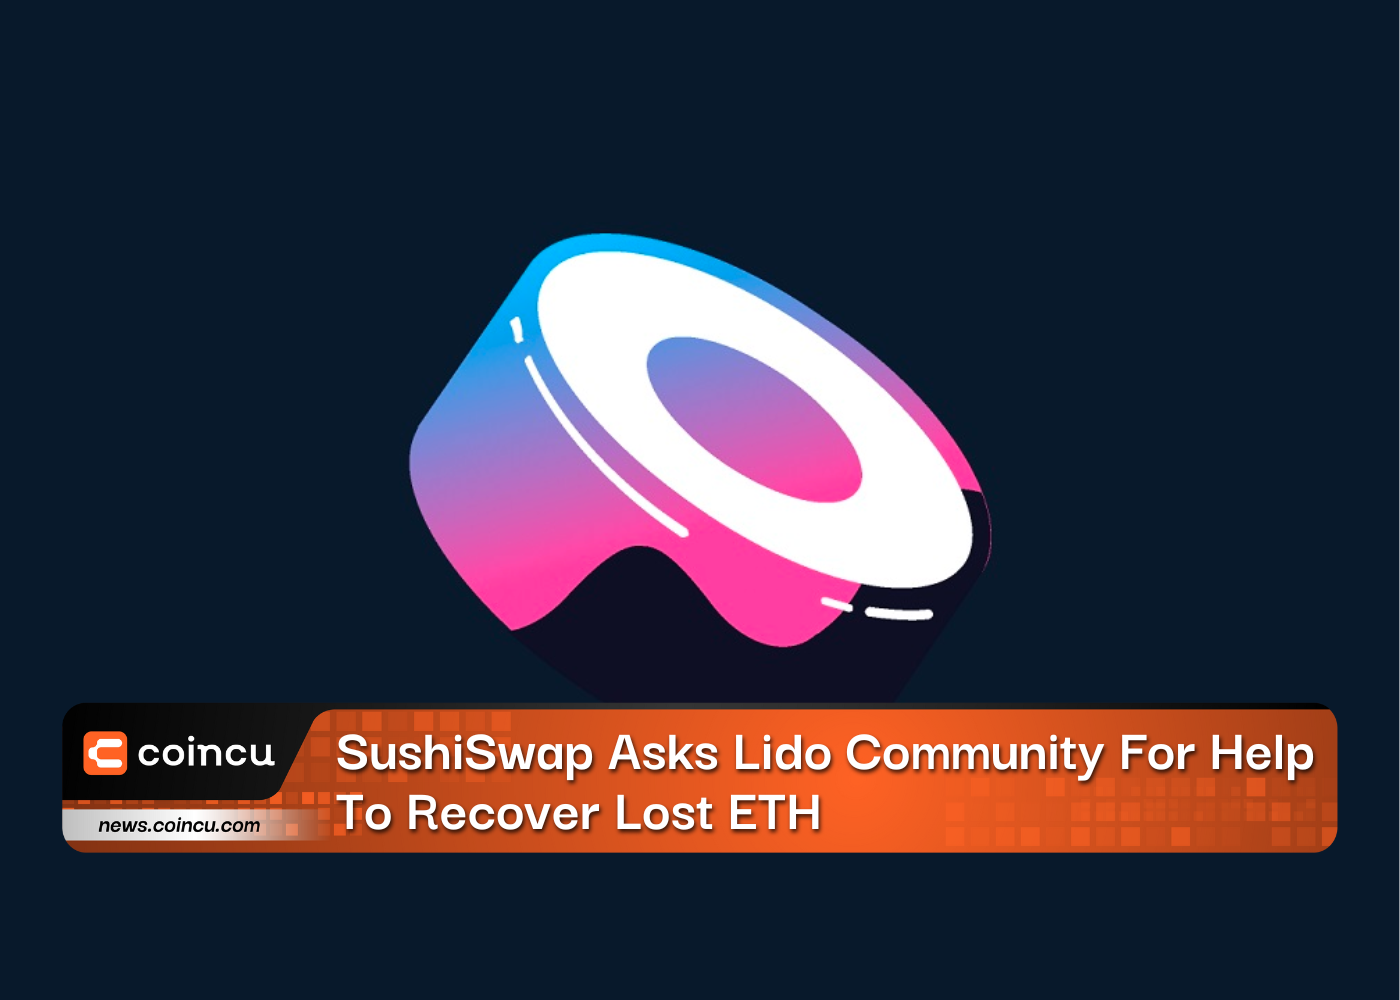 SushiSwap은 손실된 ETH를 복구하기 위해 Lido 커뮤니티에 도움을 요청합니다.